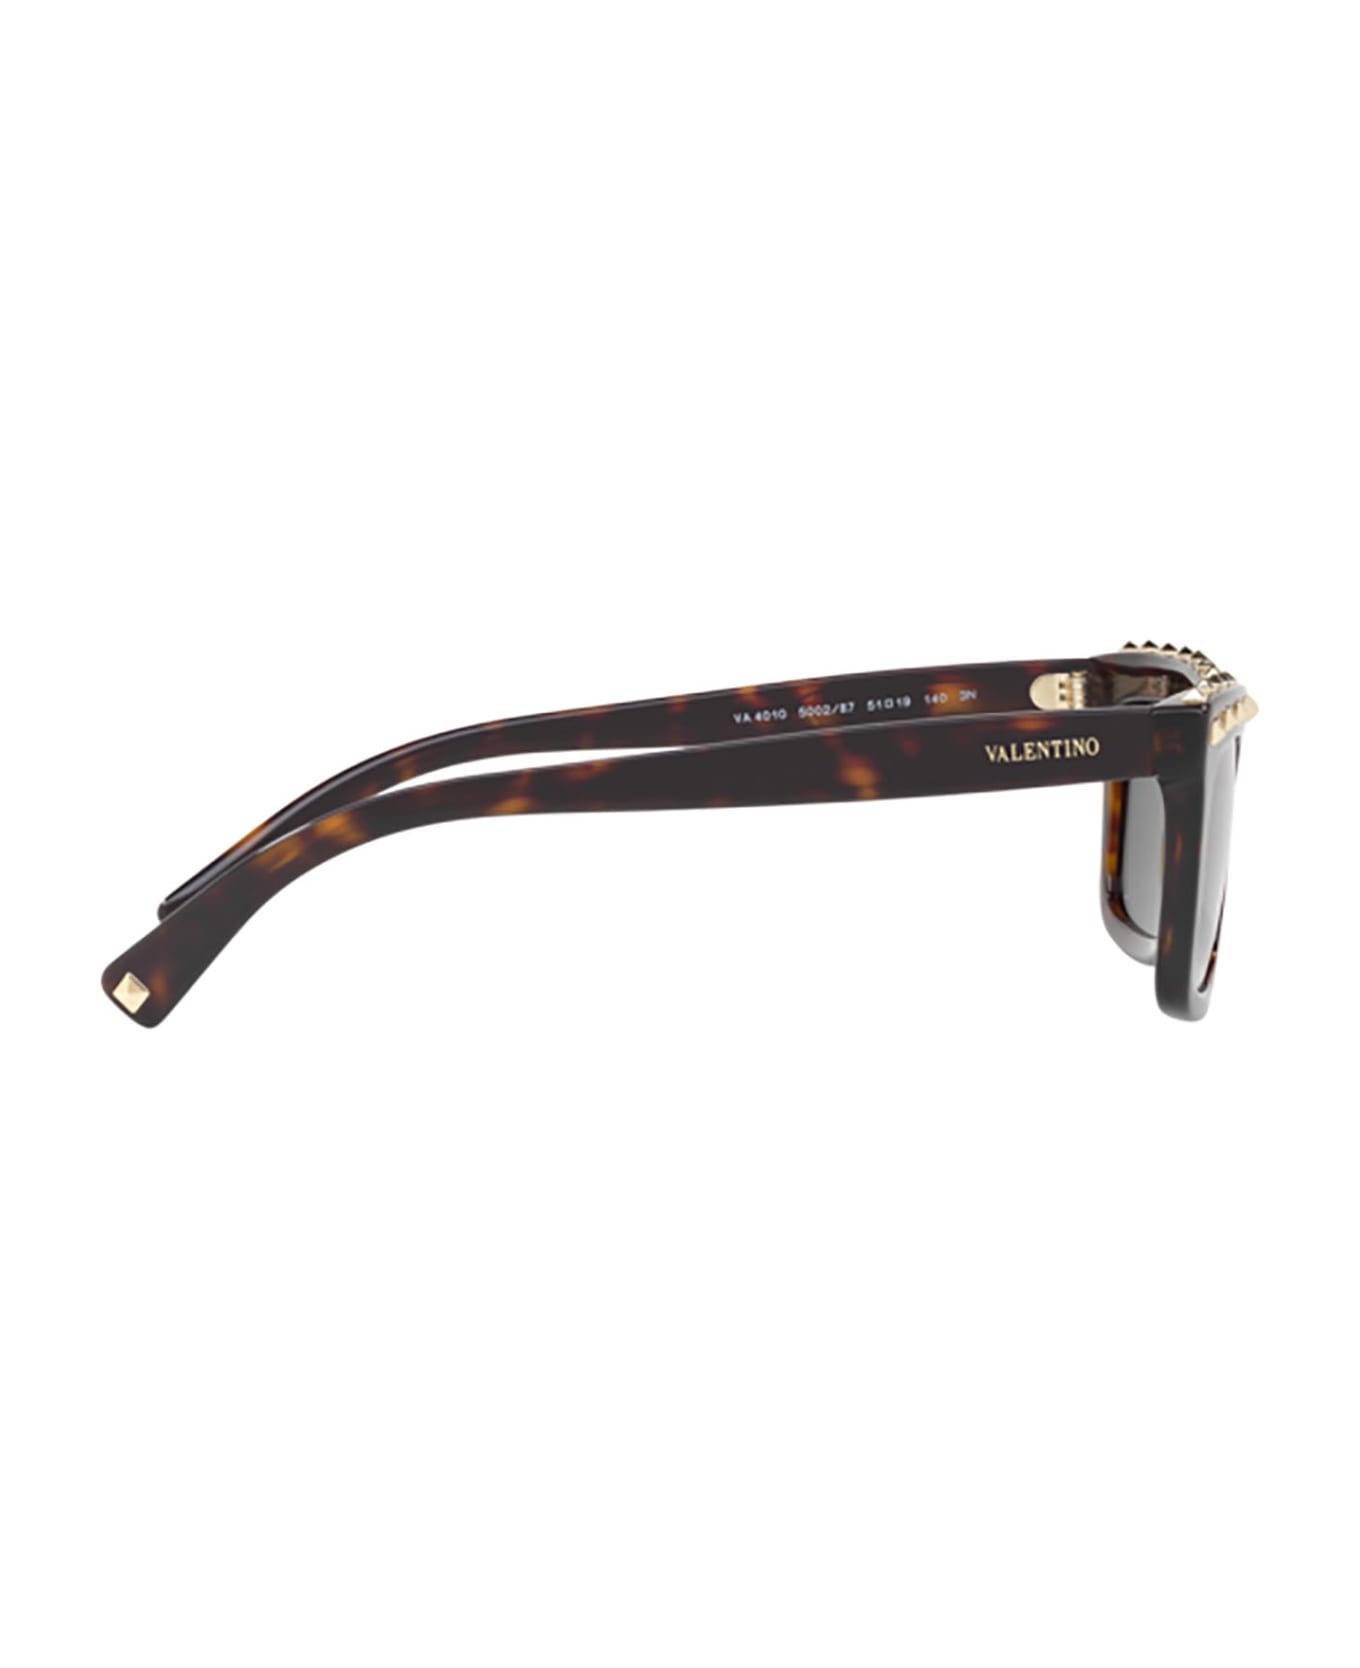 Valentino Eyewear Va4010 Havana Sunglasses - HAVANA